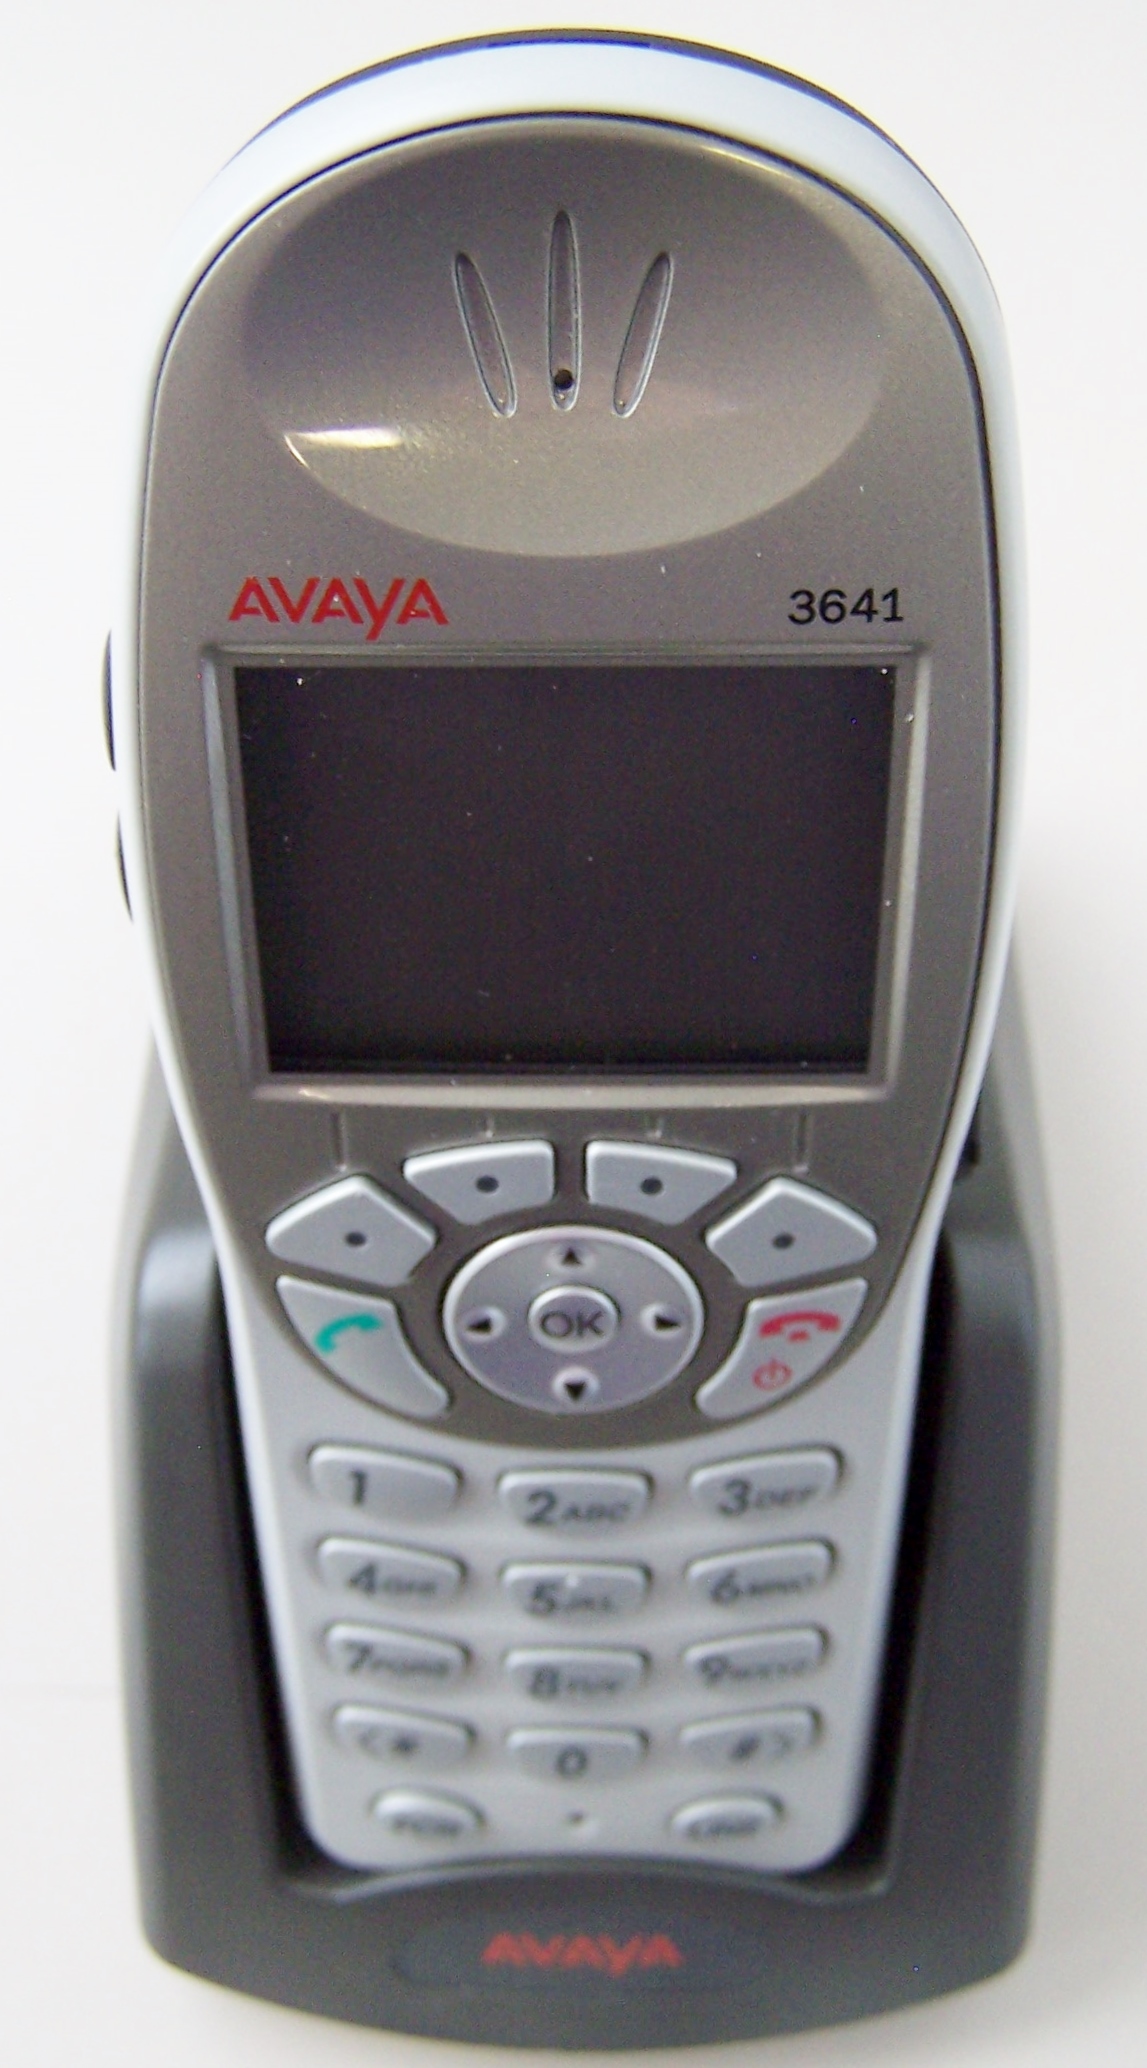 福袋 AVAYA 700430408 - Avaya 3641 Wireless IP Phone - 1 x その他周辺機器